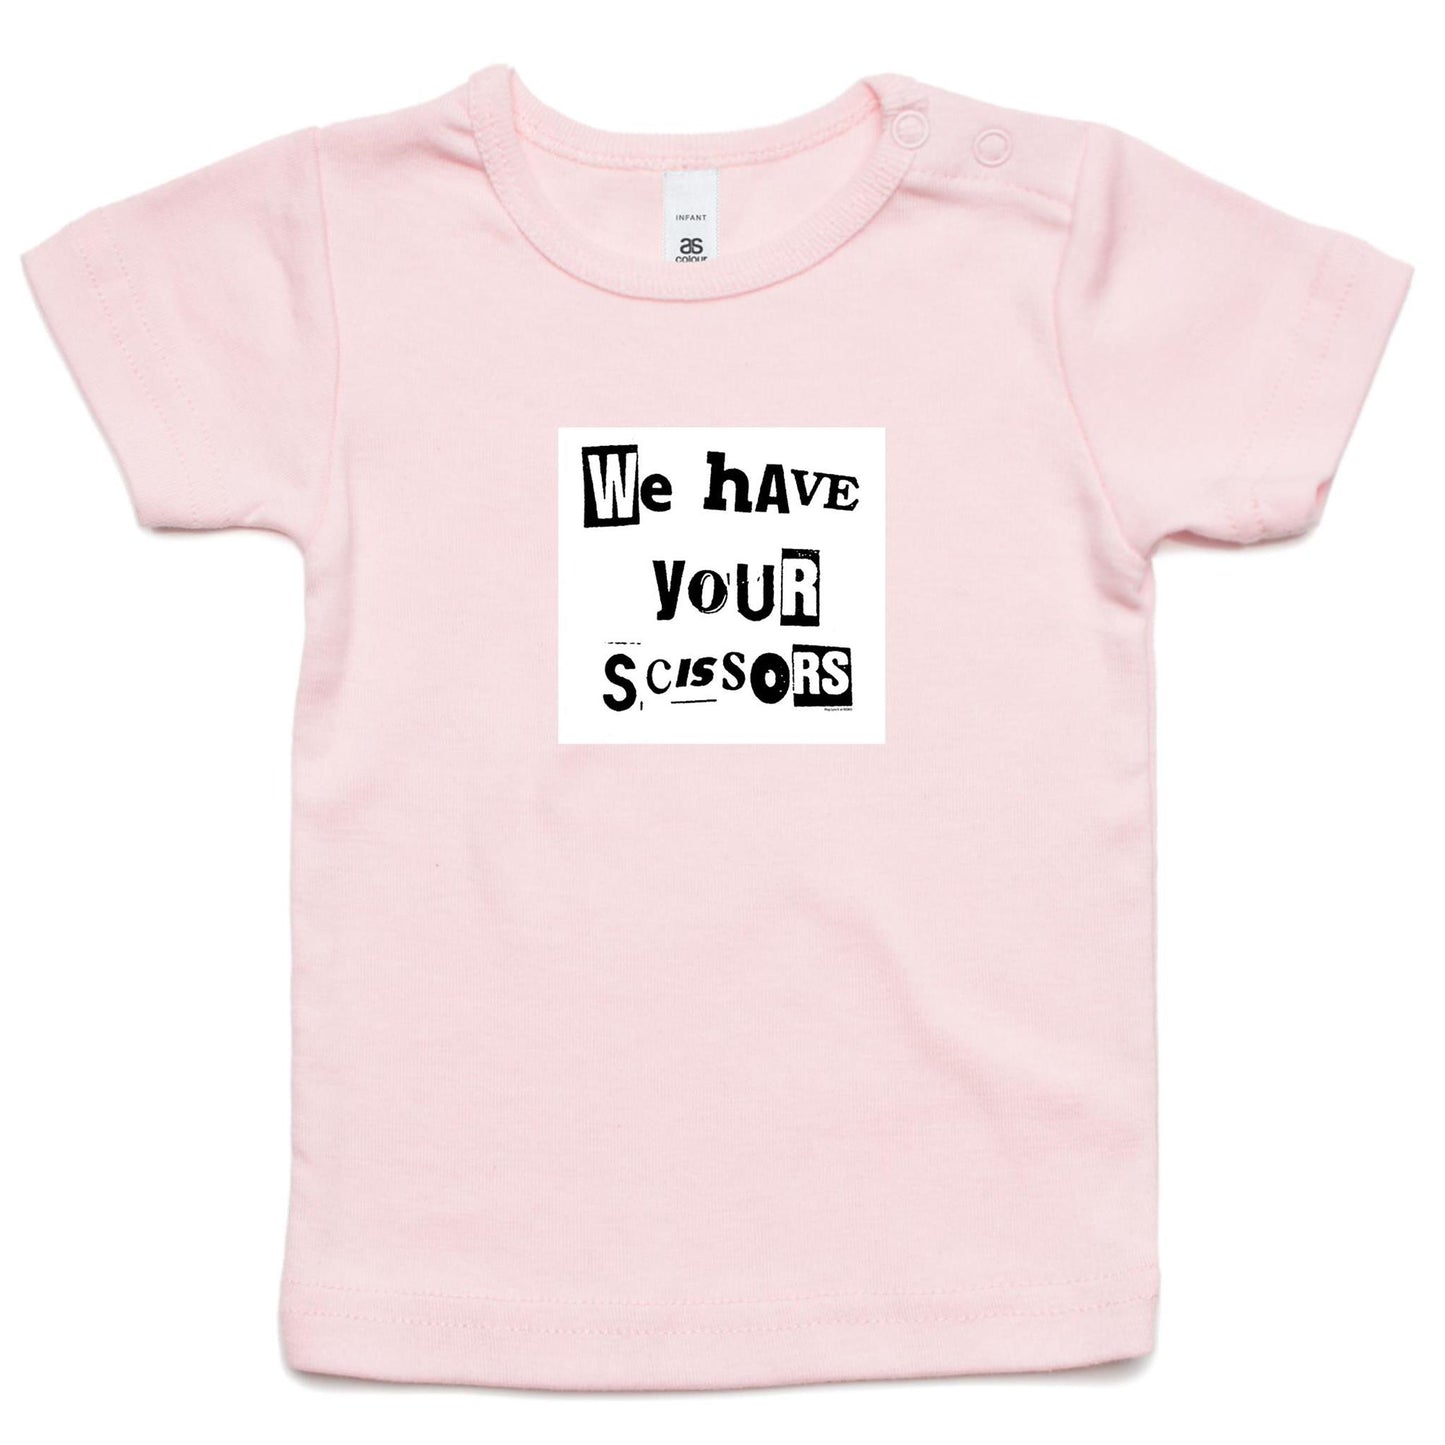 Scissors T Shirts for Babies